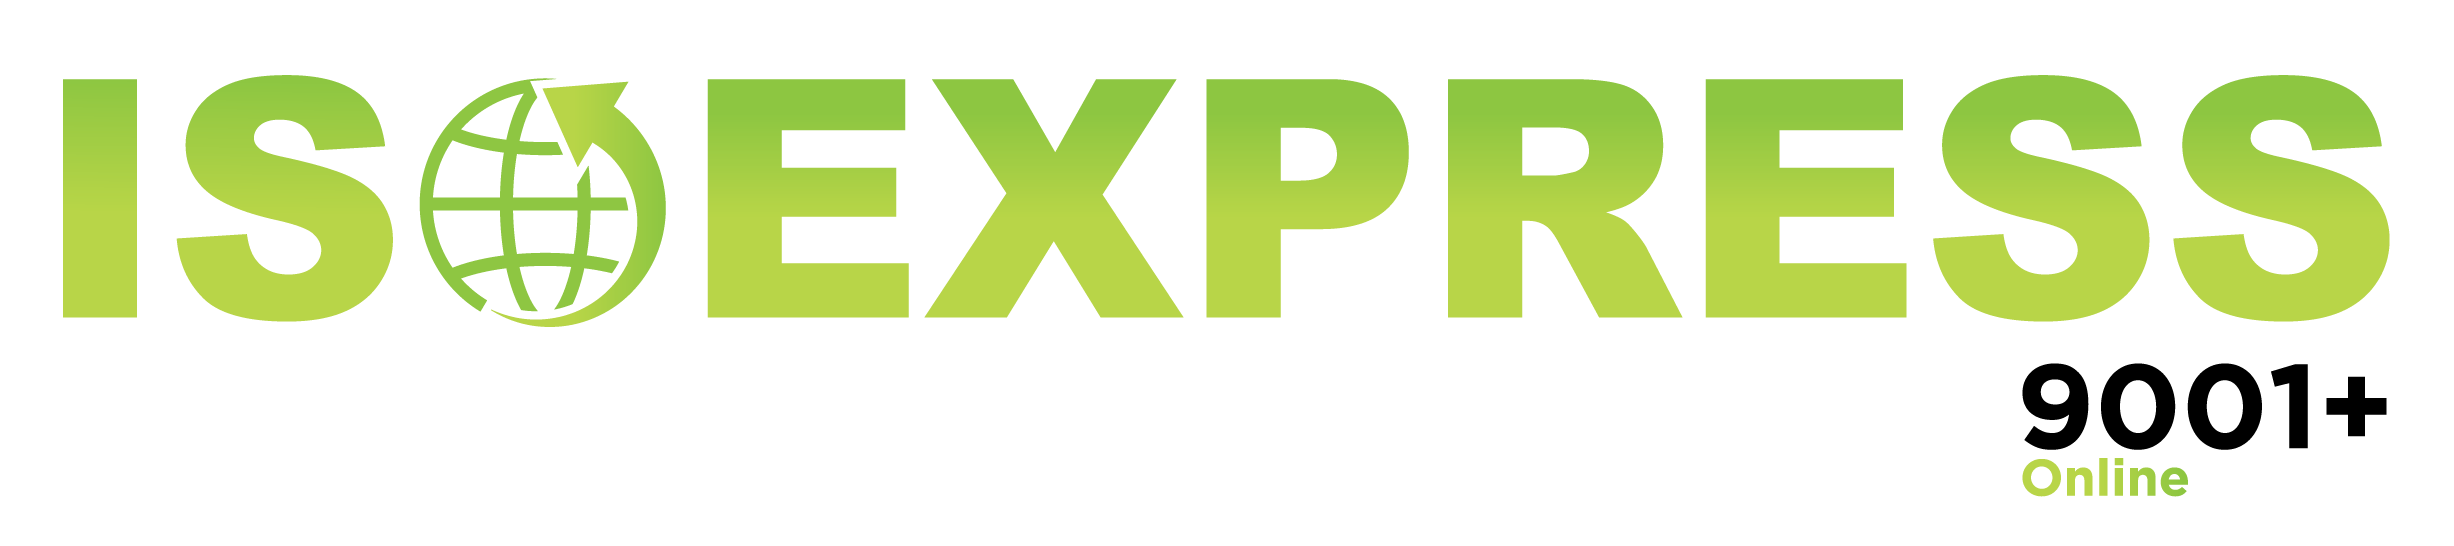 iso-express-logo